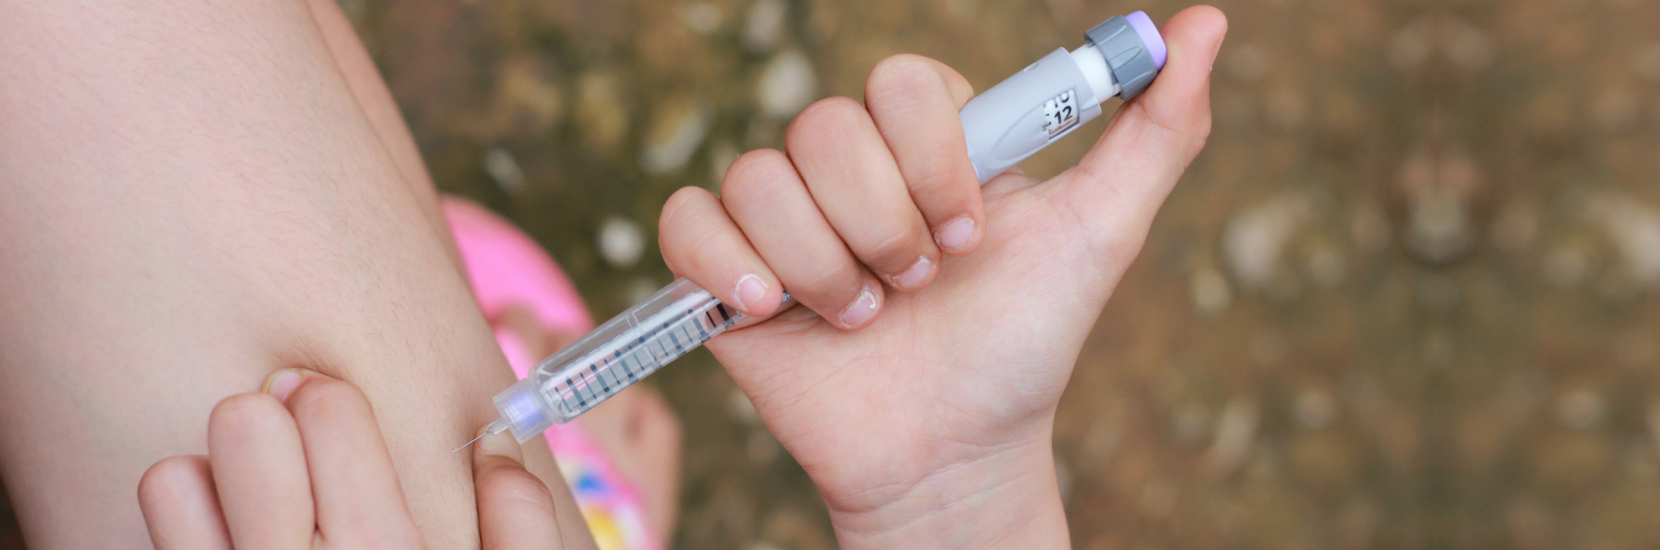 Injection au stylo à insuline